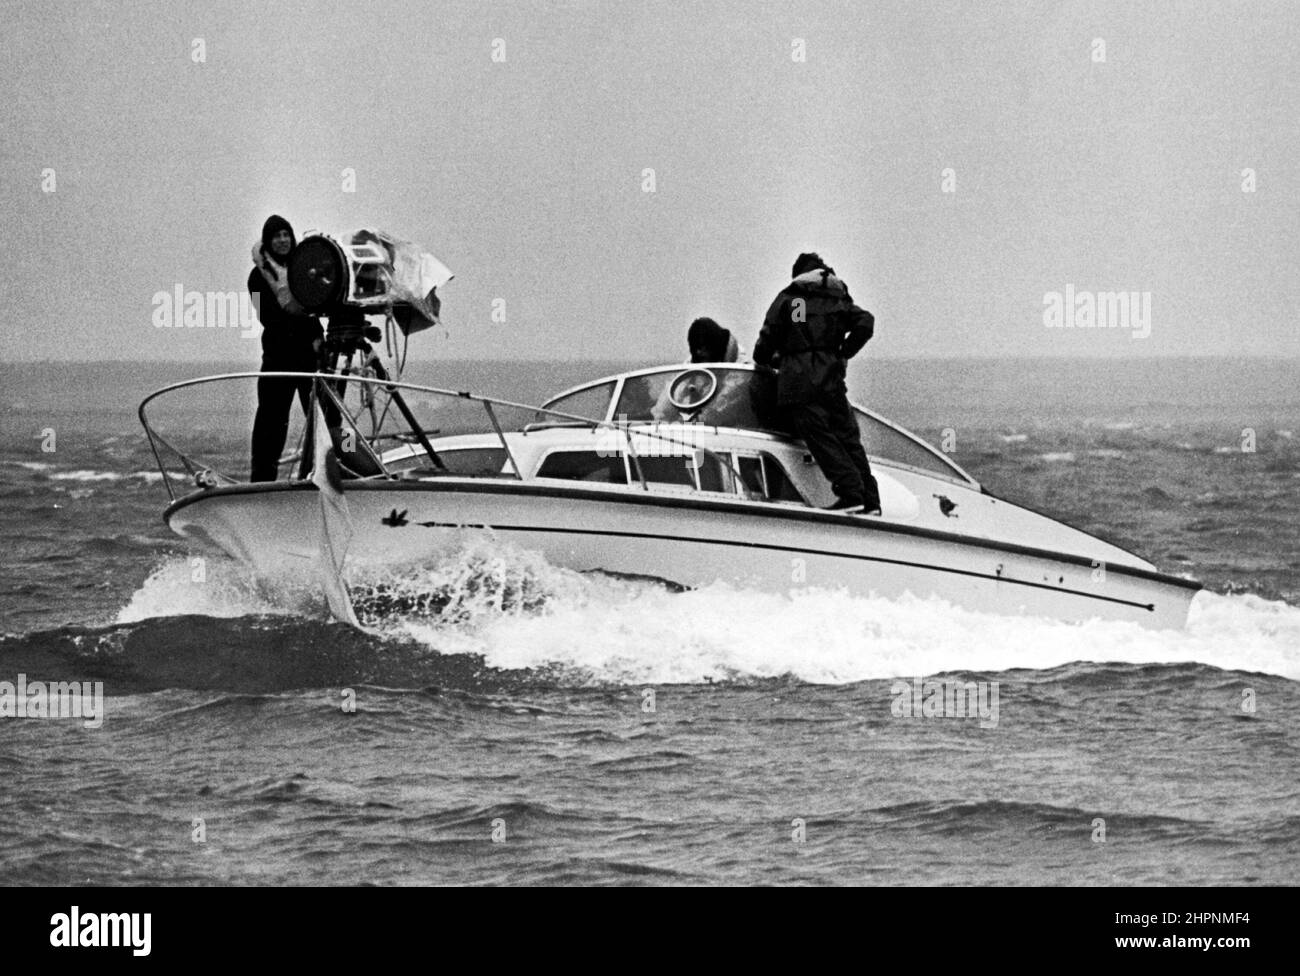 AJAXNETPHOTO. 1975. PORTLAND, ENGLAND. - MOVIE PLATFORM - A FAIREY MOTOR CRUISER BEING USED AS A CAMERA PLATFORM TO FILM WEYMOUTH SPEED WEEK EVENTS.PHOTO:JONATHAN EASTLAND/AJAX REF:WEY 75 Stock Photo